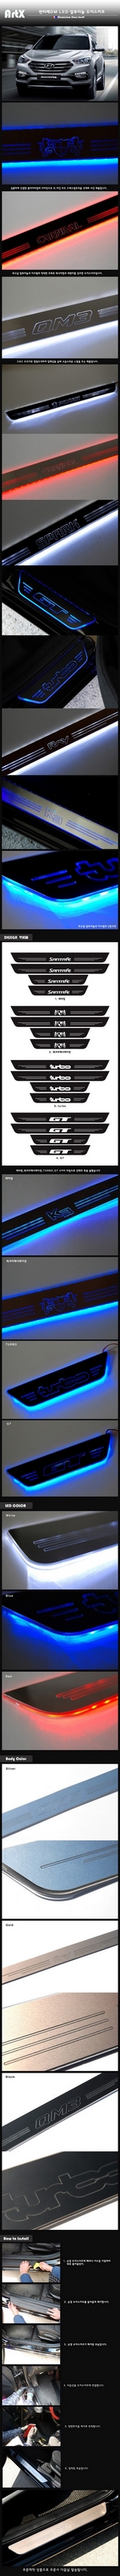 Накладки на пороги алюминиевые с подсветкой (вариант 2) ArtX Hyundai ix55 2007-2014